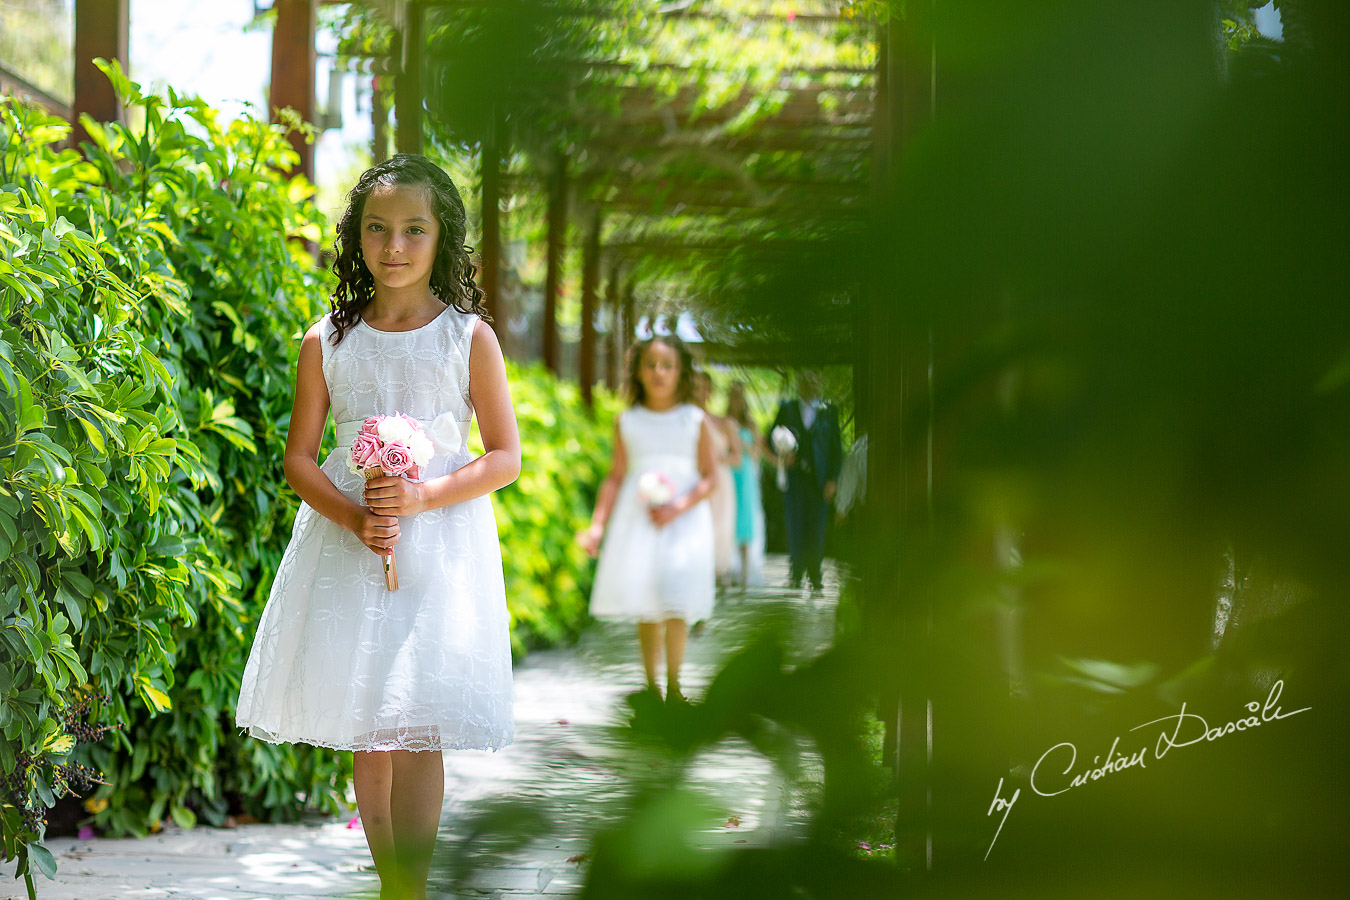 Beautiful flower girl photographed at Nissi Beach Resort in Ayia Napa, Cyprus by Cristian Dascalu.